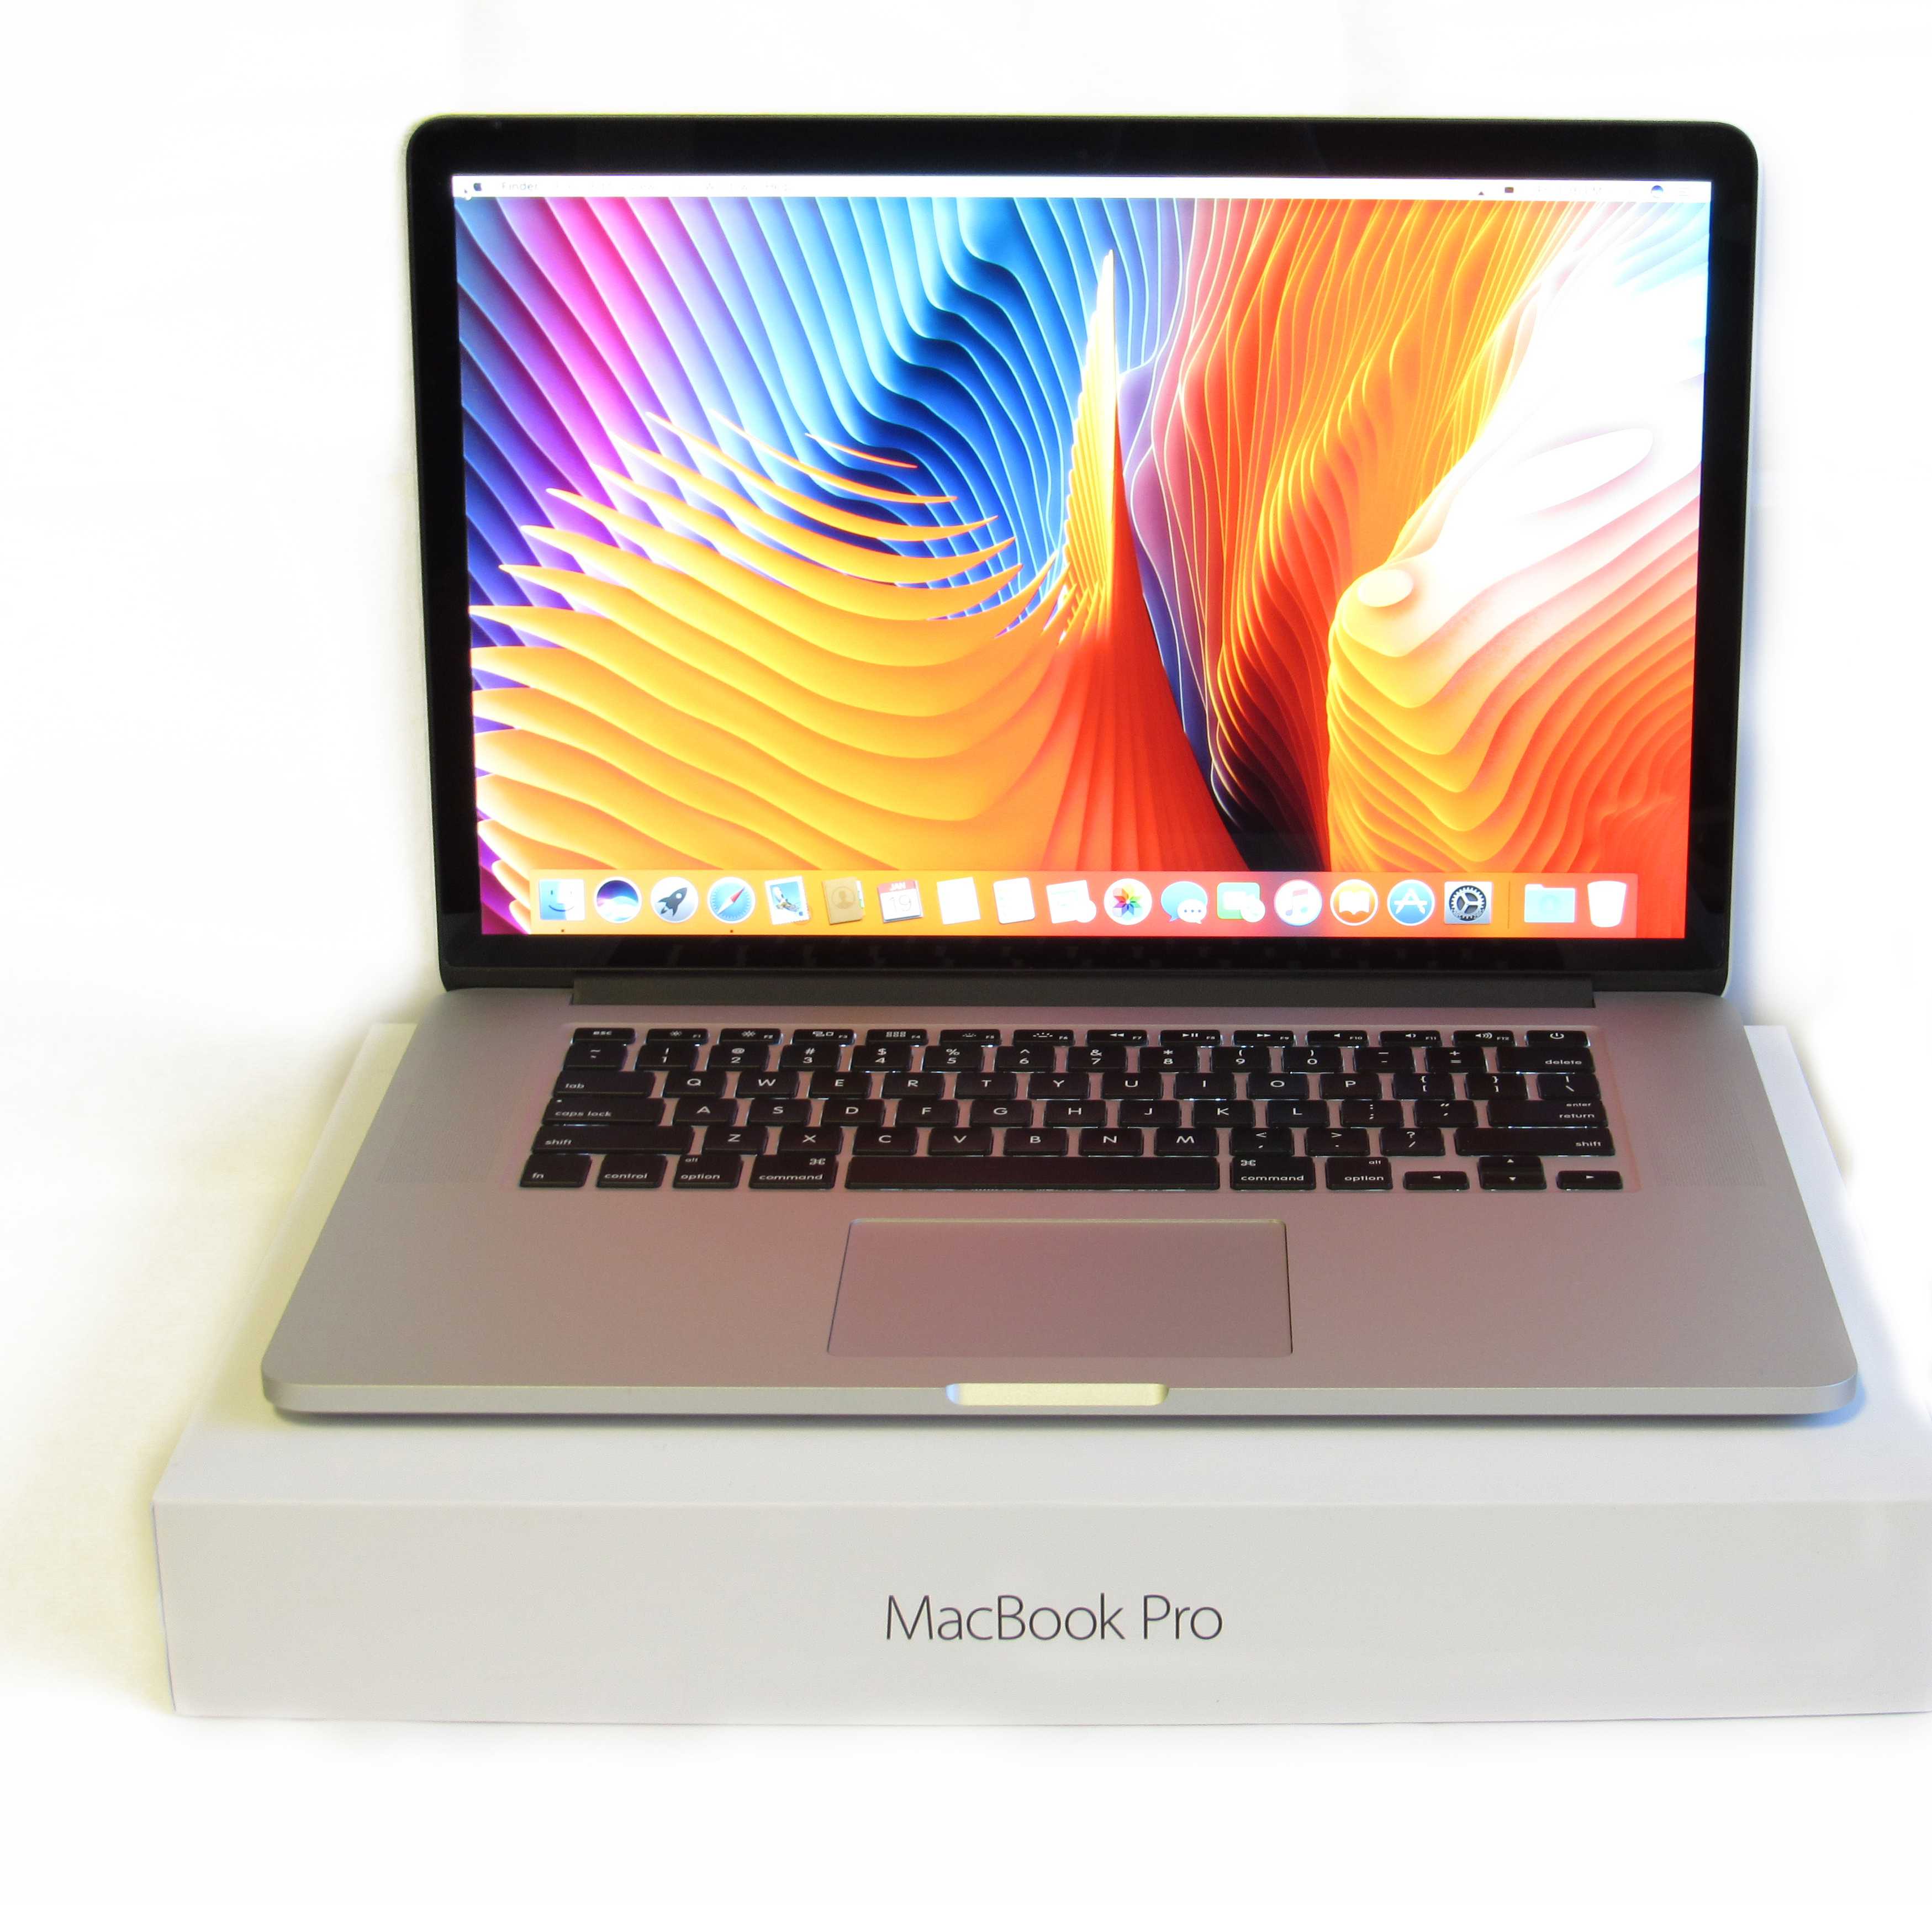 Pre-Owned Apple MacBook Pro 15-Inch Retina Laptop i7 2.5GHz • 16GB DDR3 Ram • 2TB SSD • Radeon R9 M370X 2GB Video • MJLT2LL/A • OS X Mojave (Good) - image 1 of 4